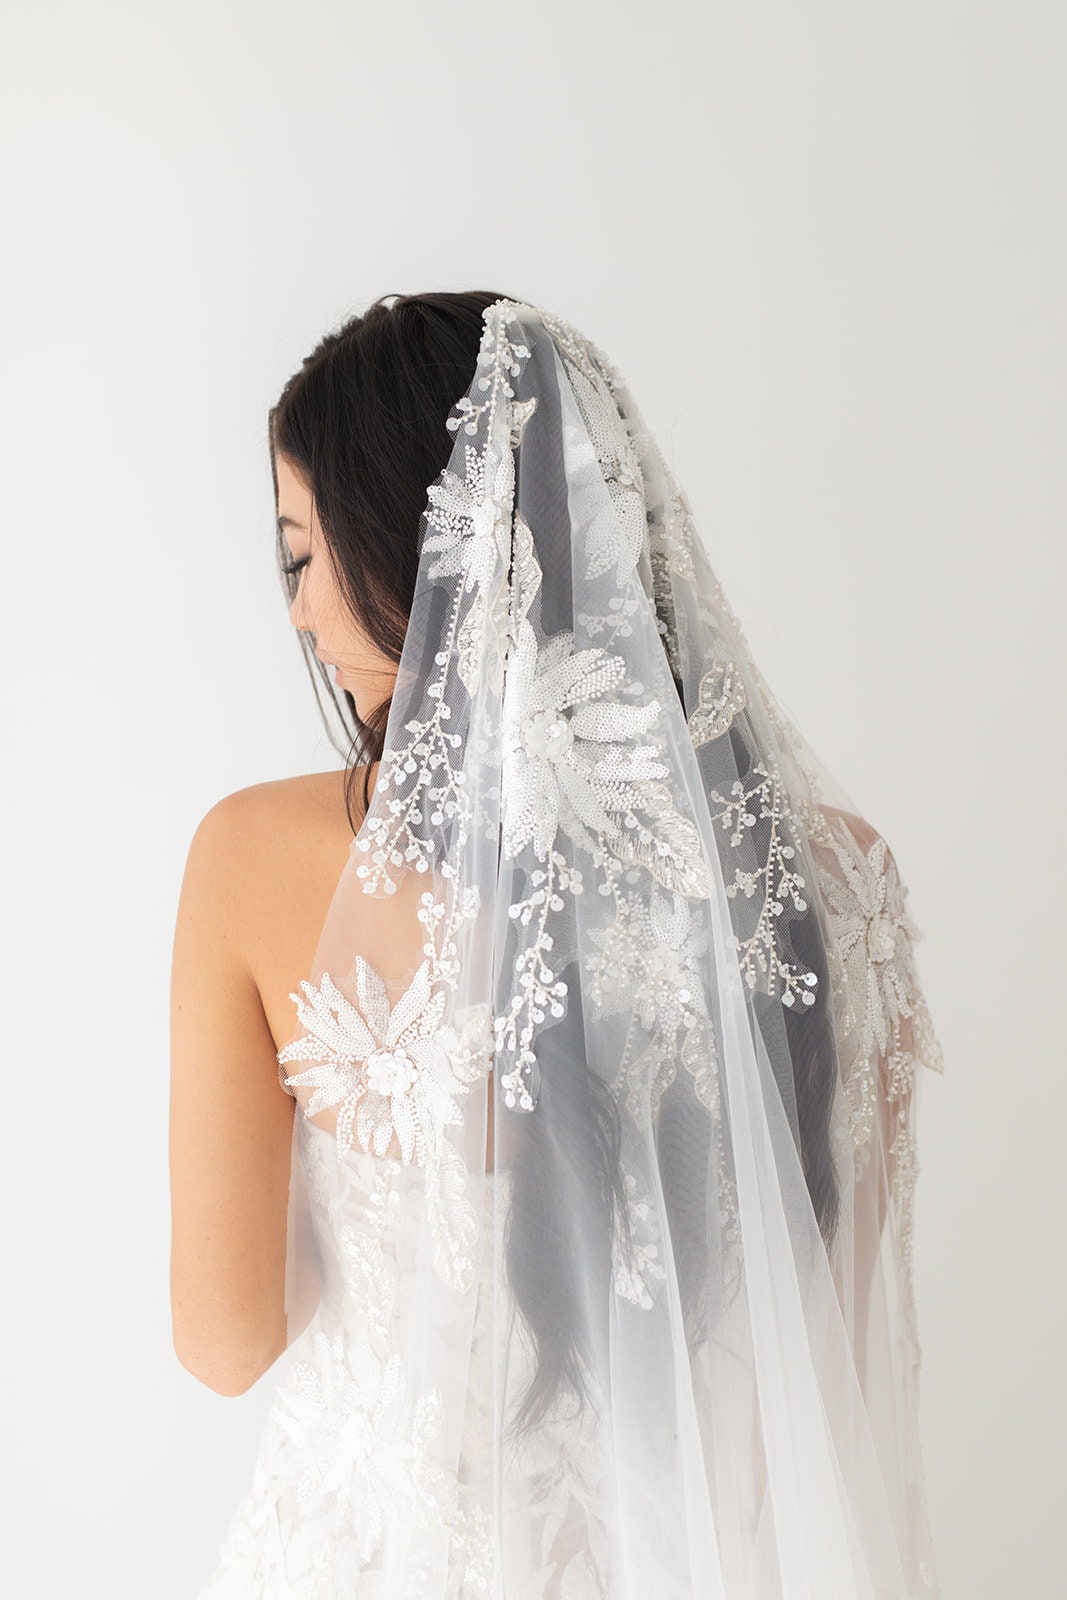 LittleWhiteCoutureAU Embellished Floral Cathedral Wedding Veil| Cathedral Wedding Veil| Ivory Veil| Bridal Veil| Long Crystal Veil| One Tier Veil| Sierra Veil